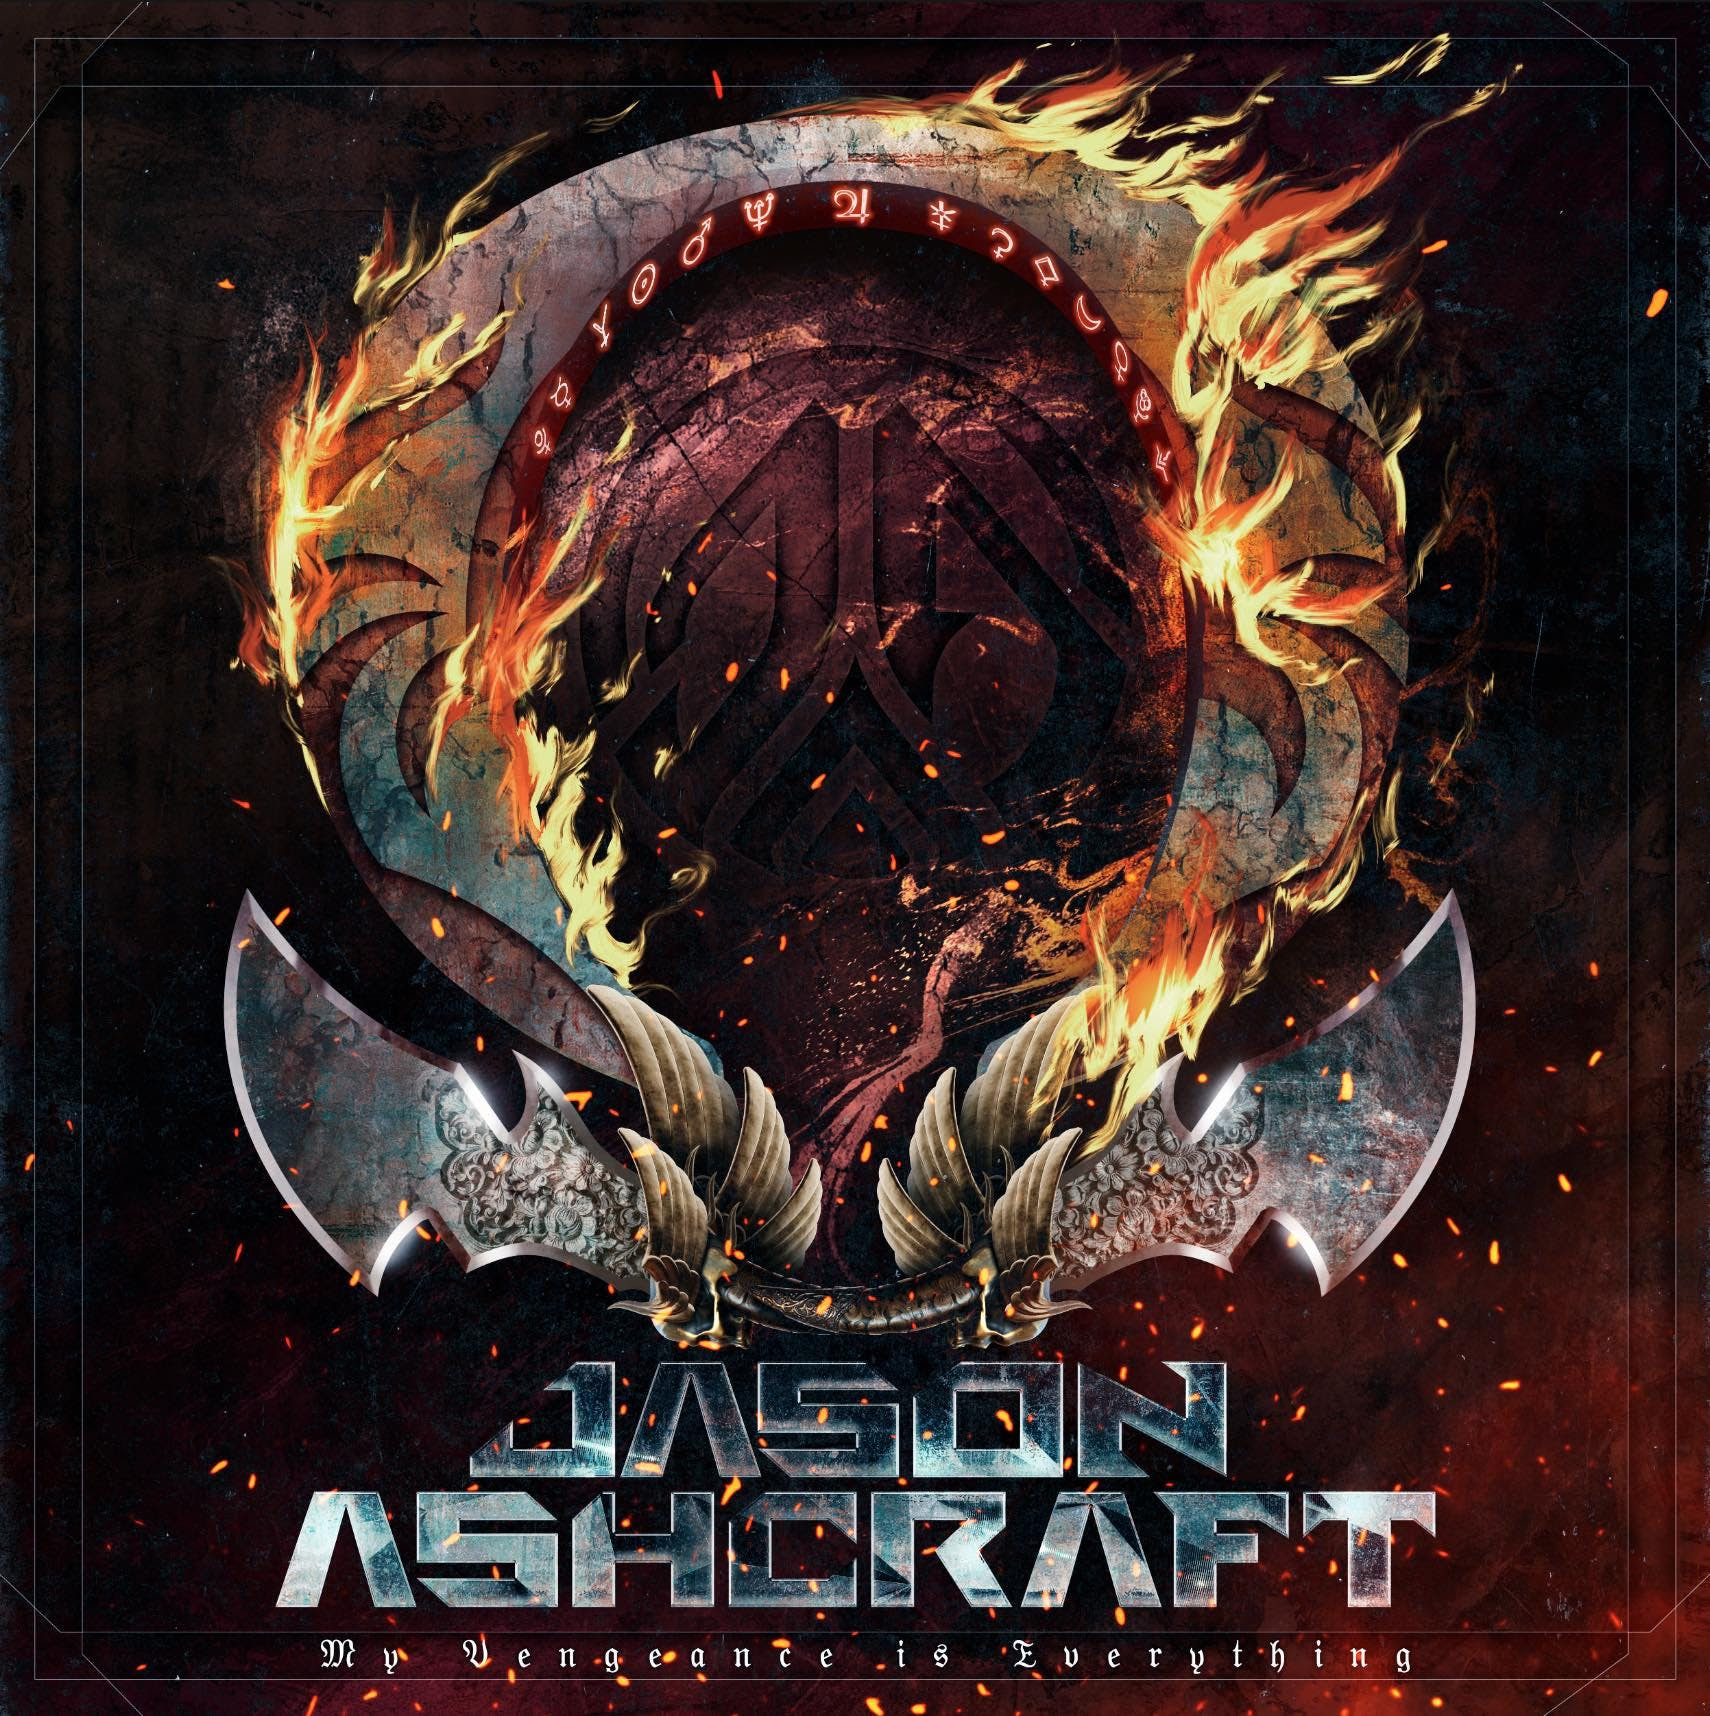 LISTEN: My Vengeance is Everything EP by Jason Ashcraft